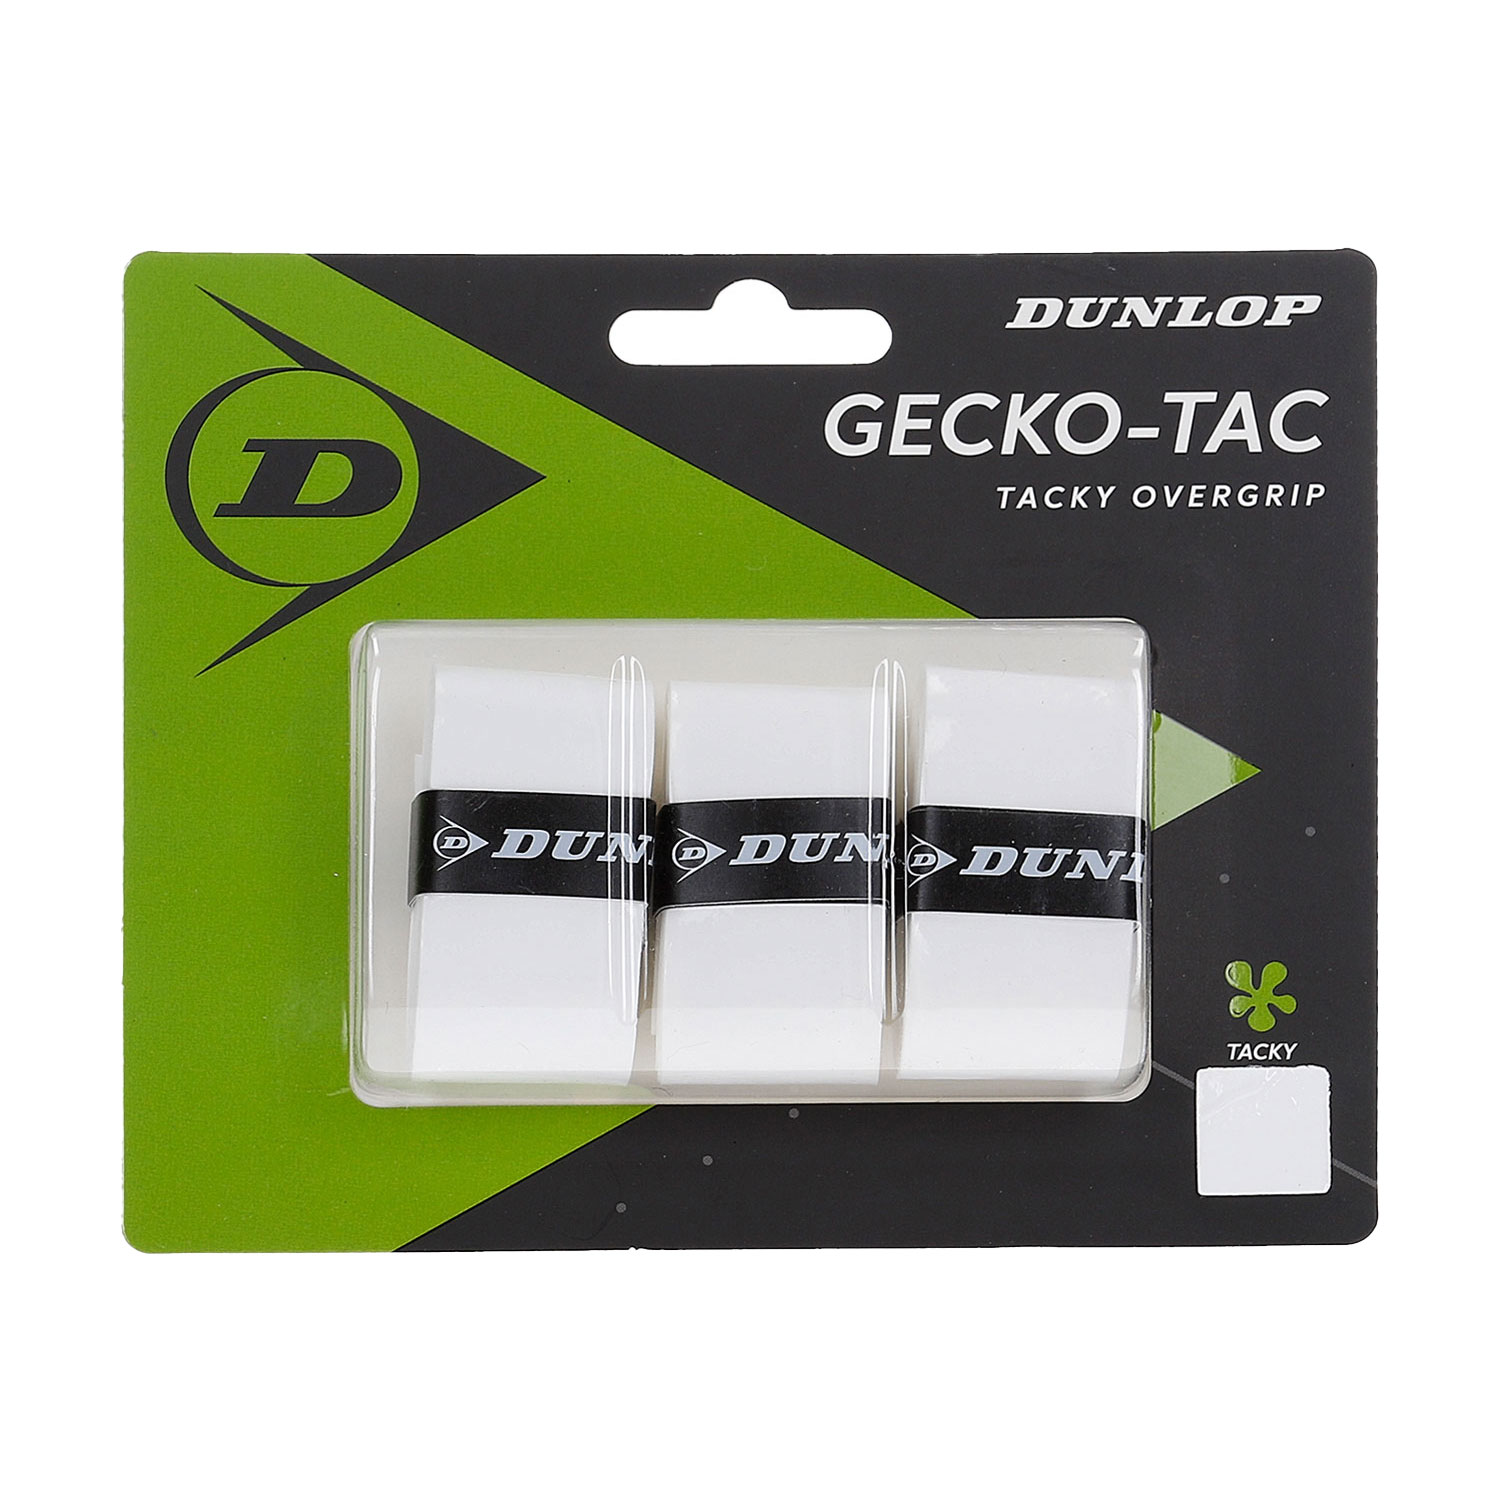 Dunlop Gecko-Tac Overgrip x 3 - White